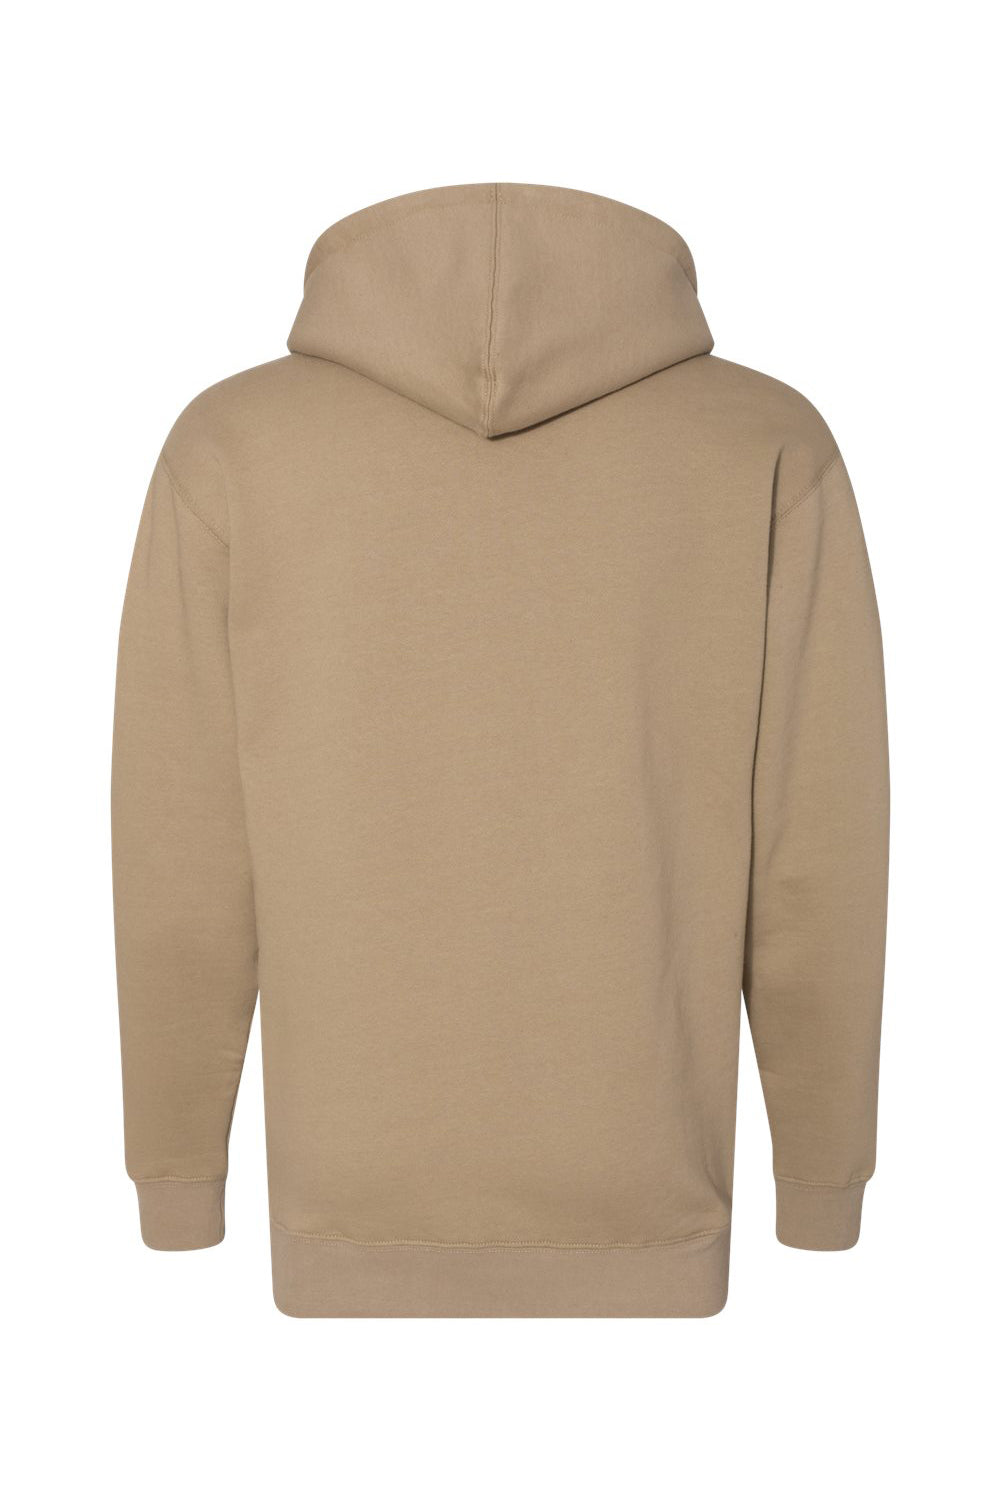 Independent Trading Co. IND4000 Mens Hooded Sweatshirt Hoodie Sandstone Brown Flat Back